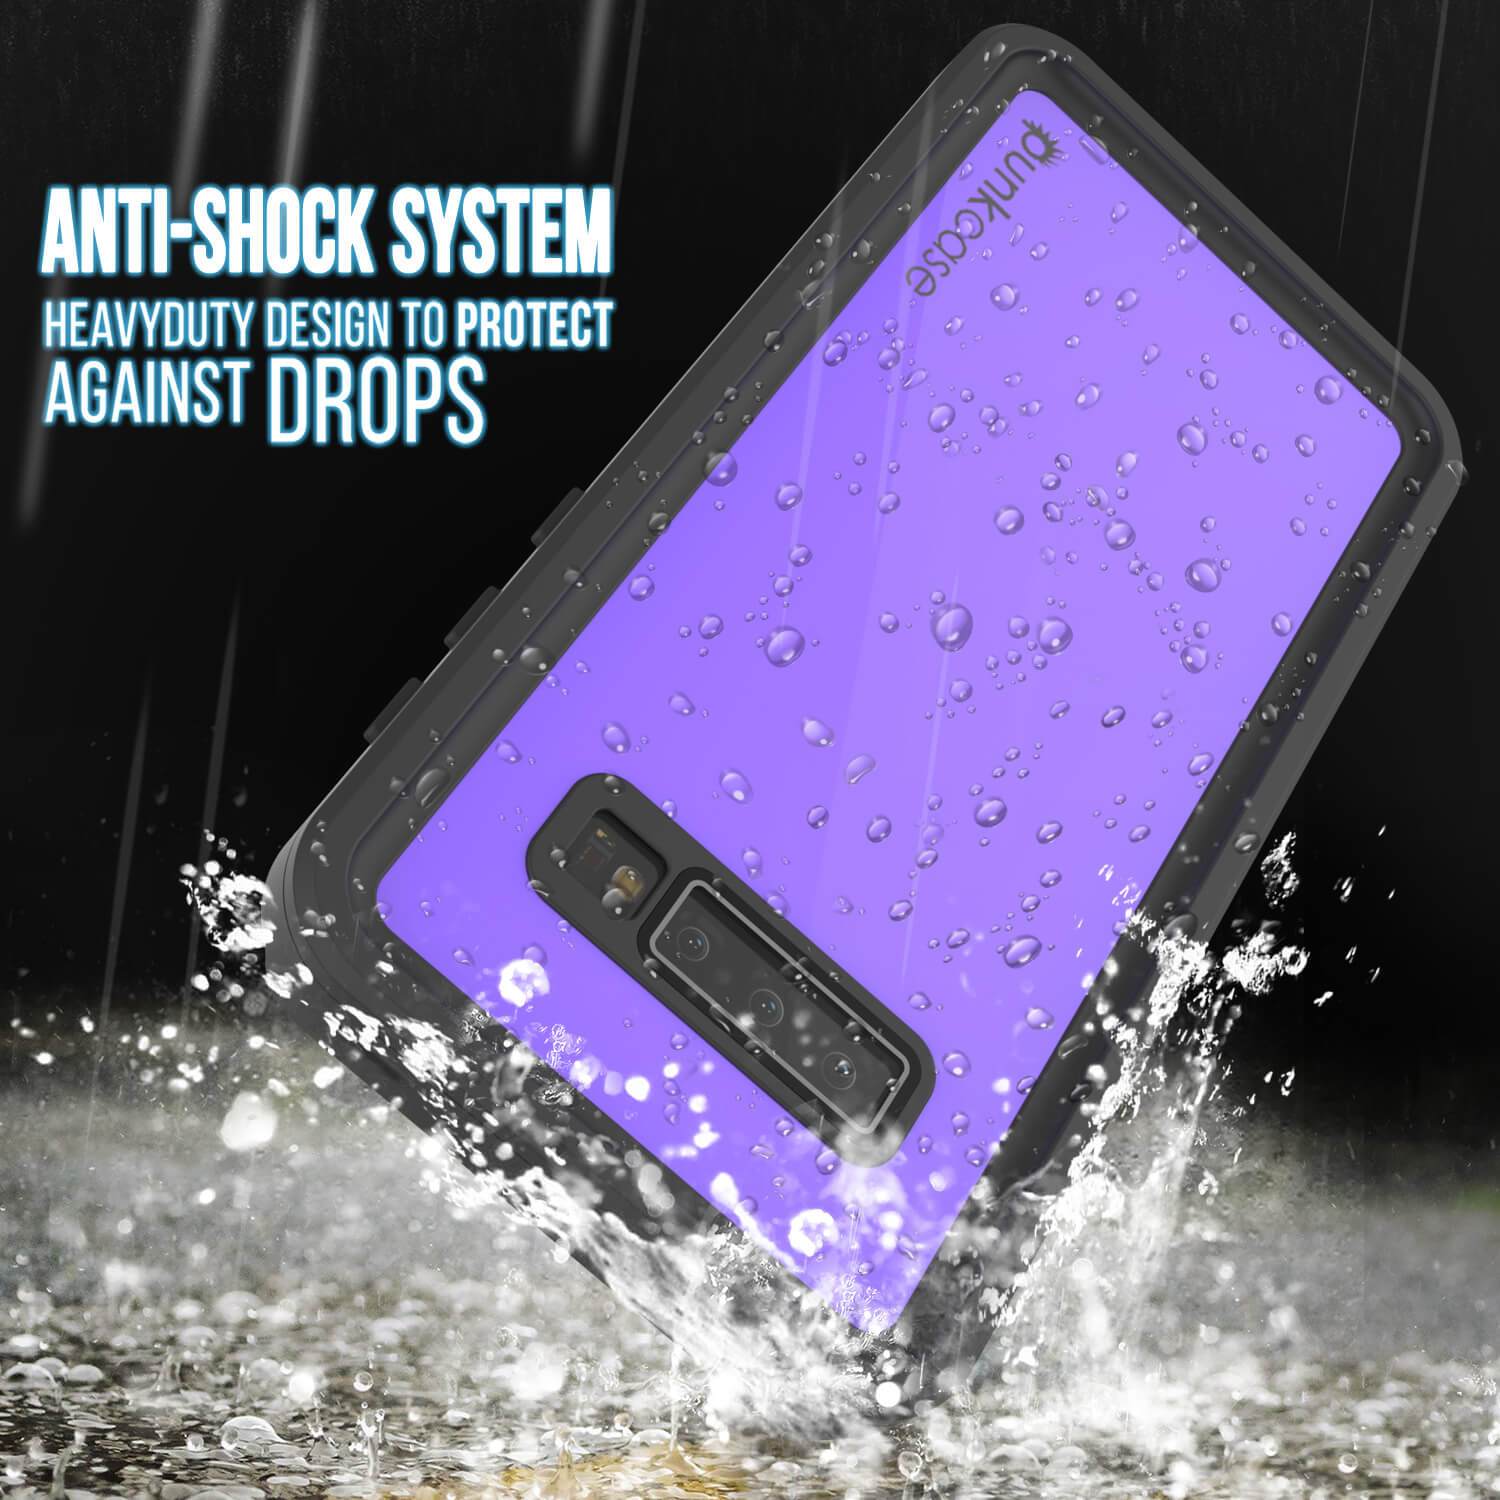 Galaxy S10 Waterproof Case PunkCase StudStar Purple Thin 6.6ft Underwater IP68 Shock/Snow Proof